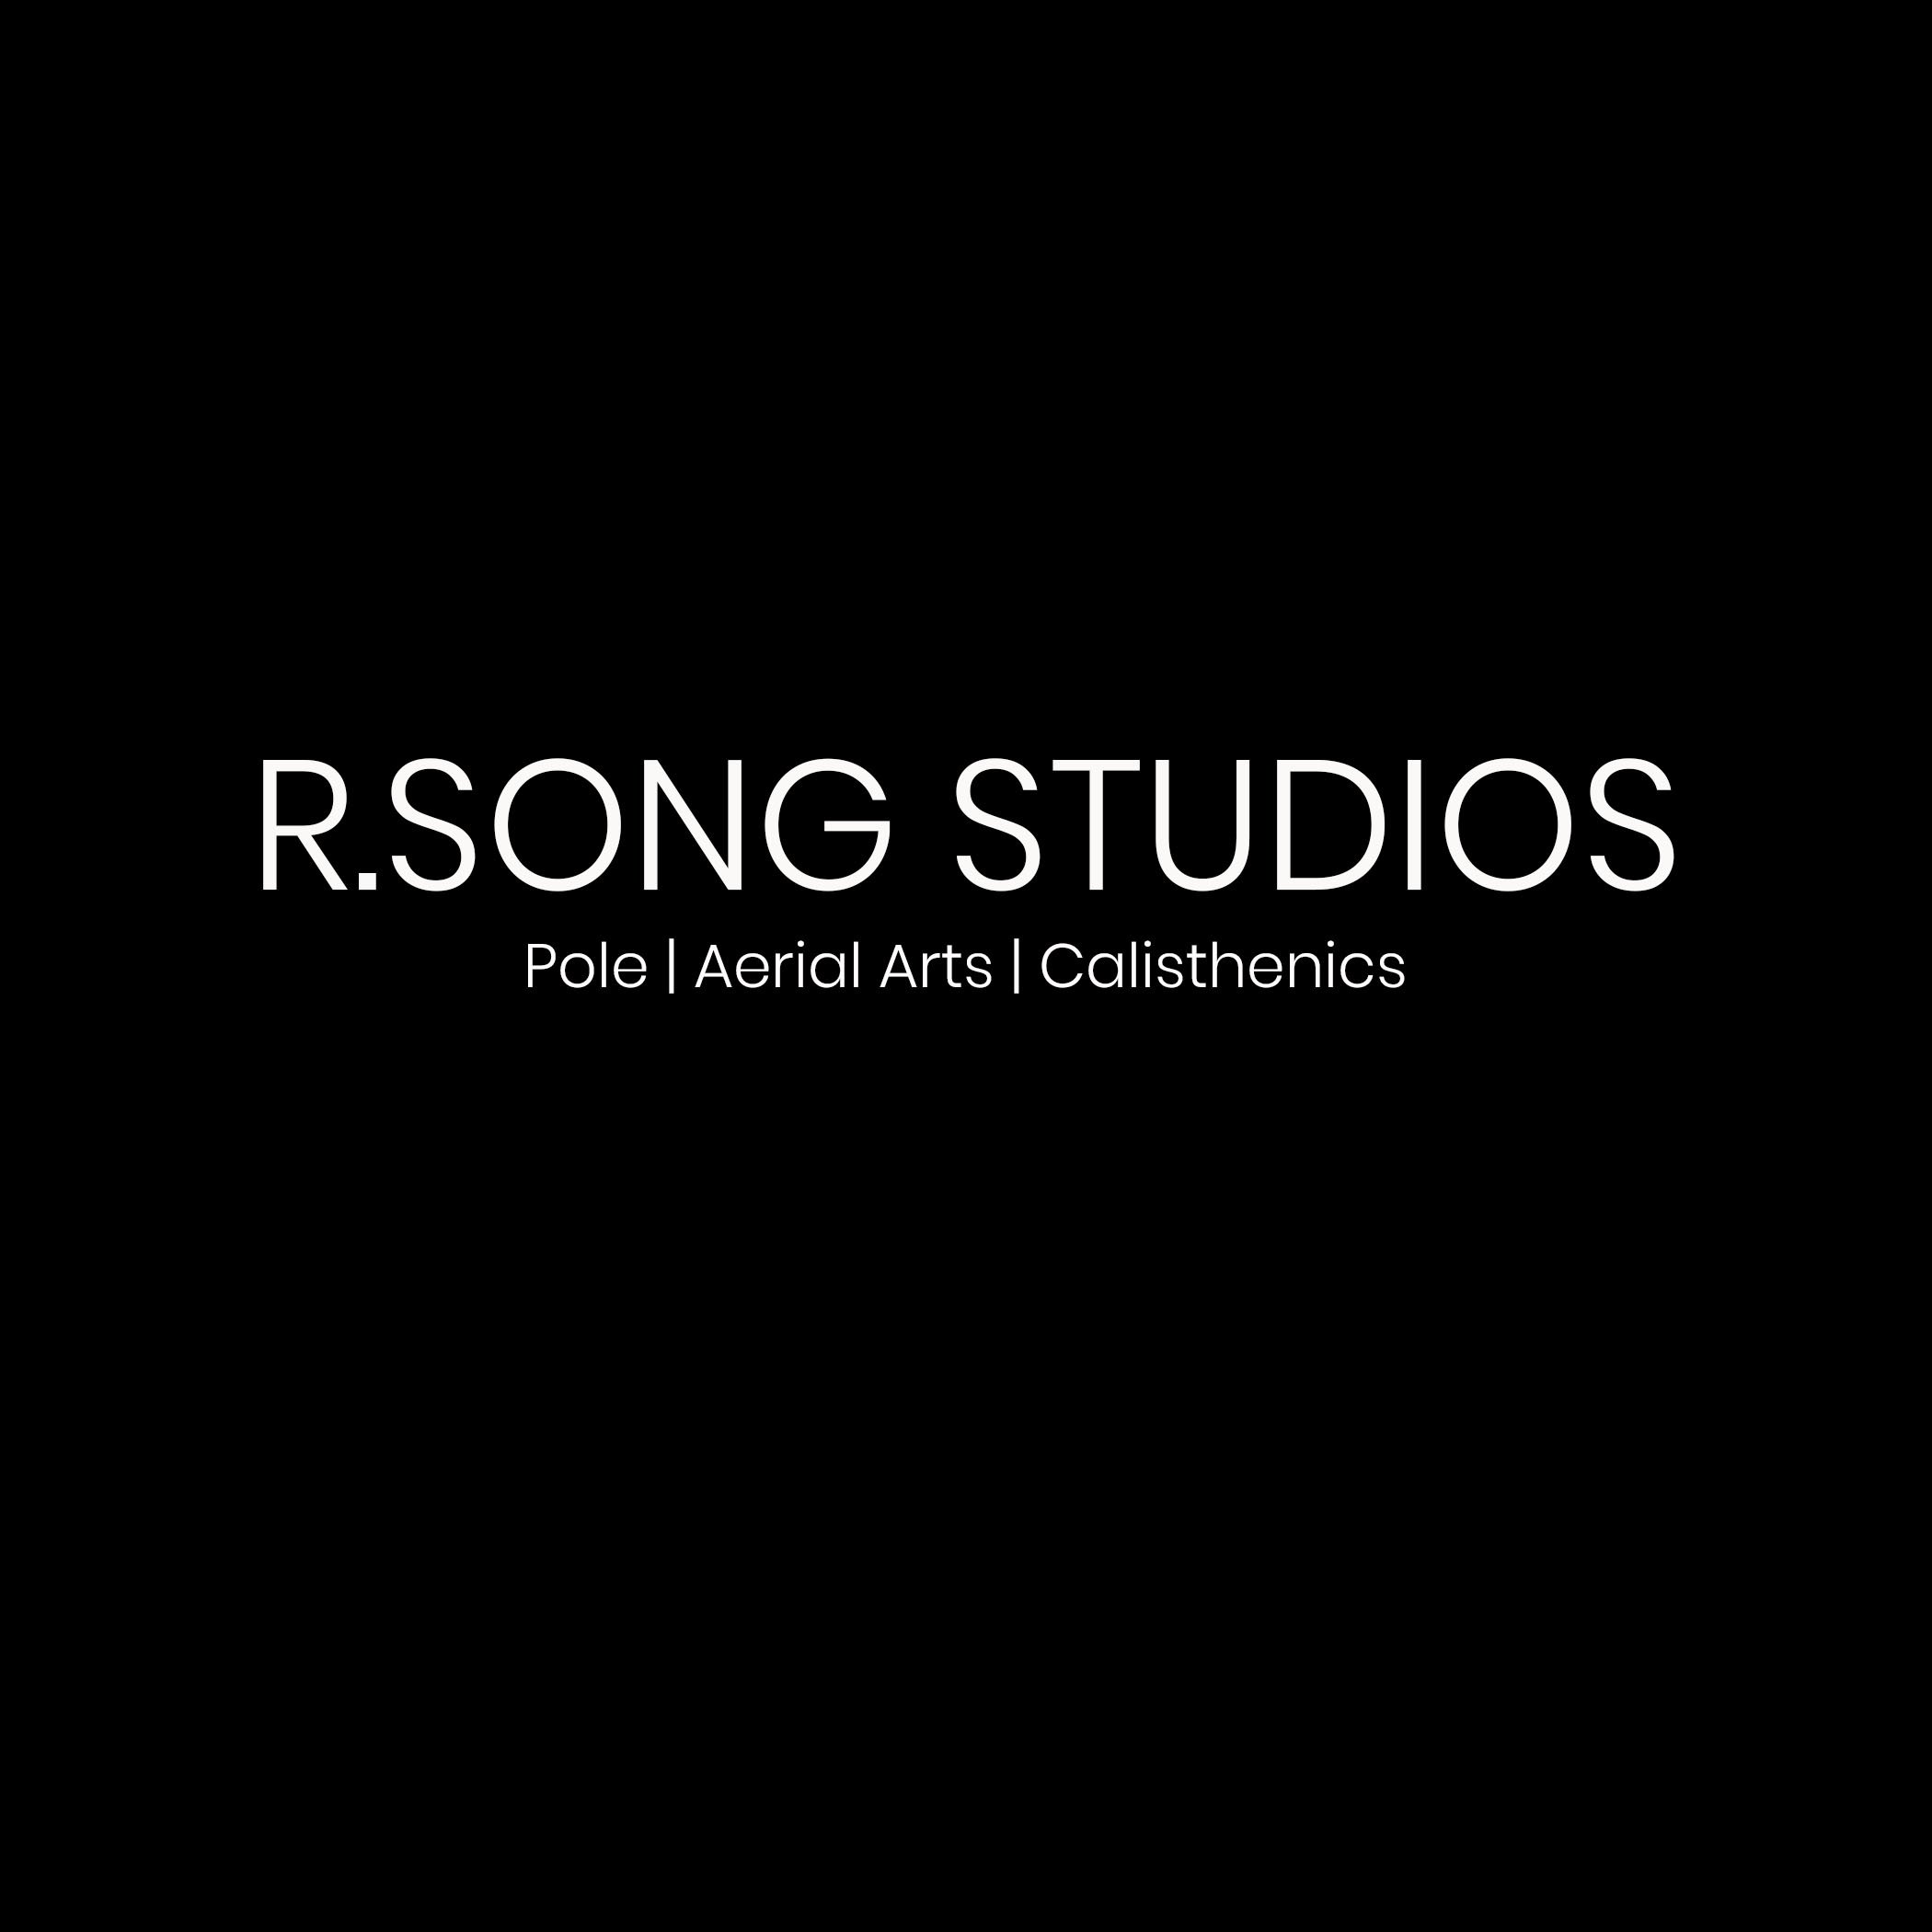 R.Song Studios